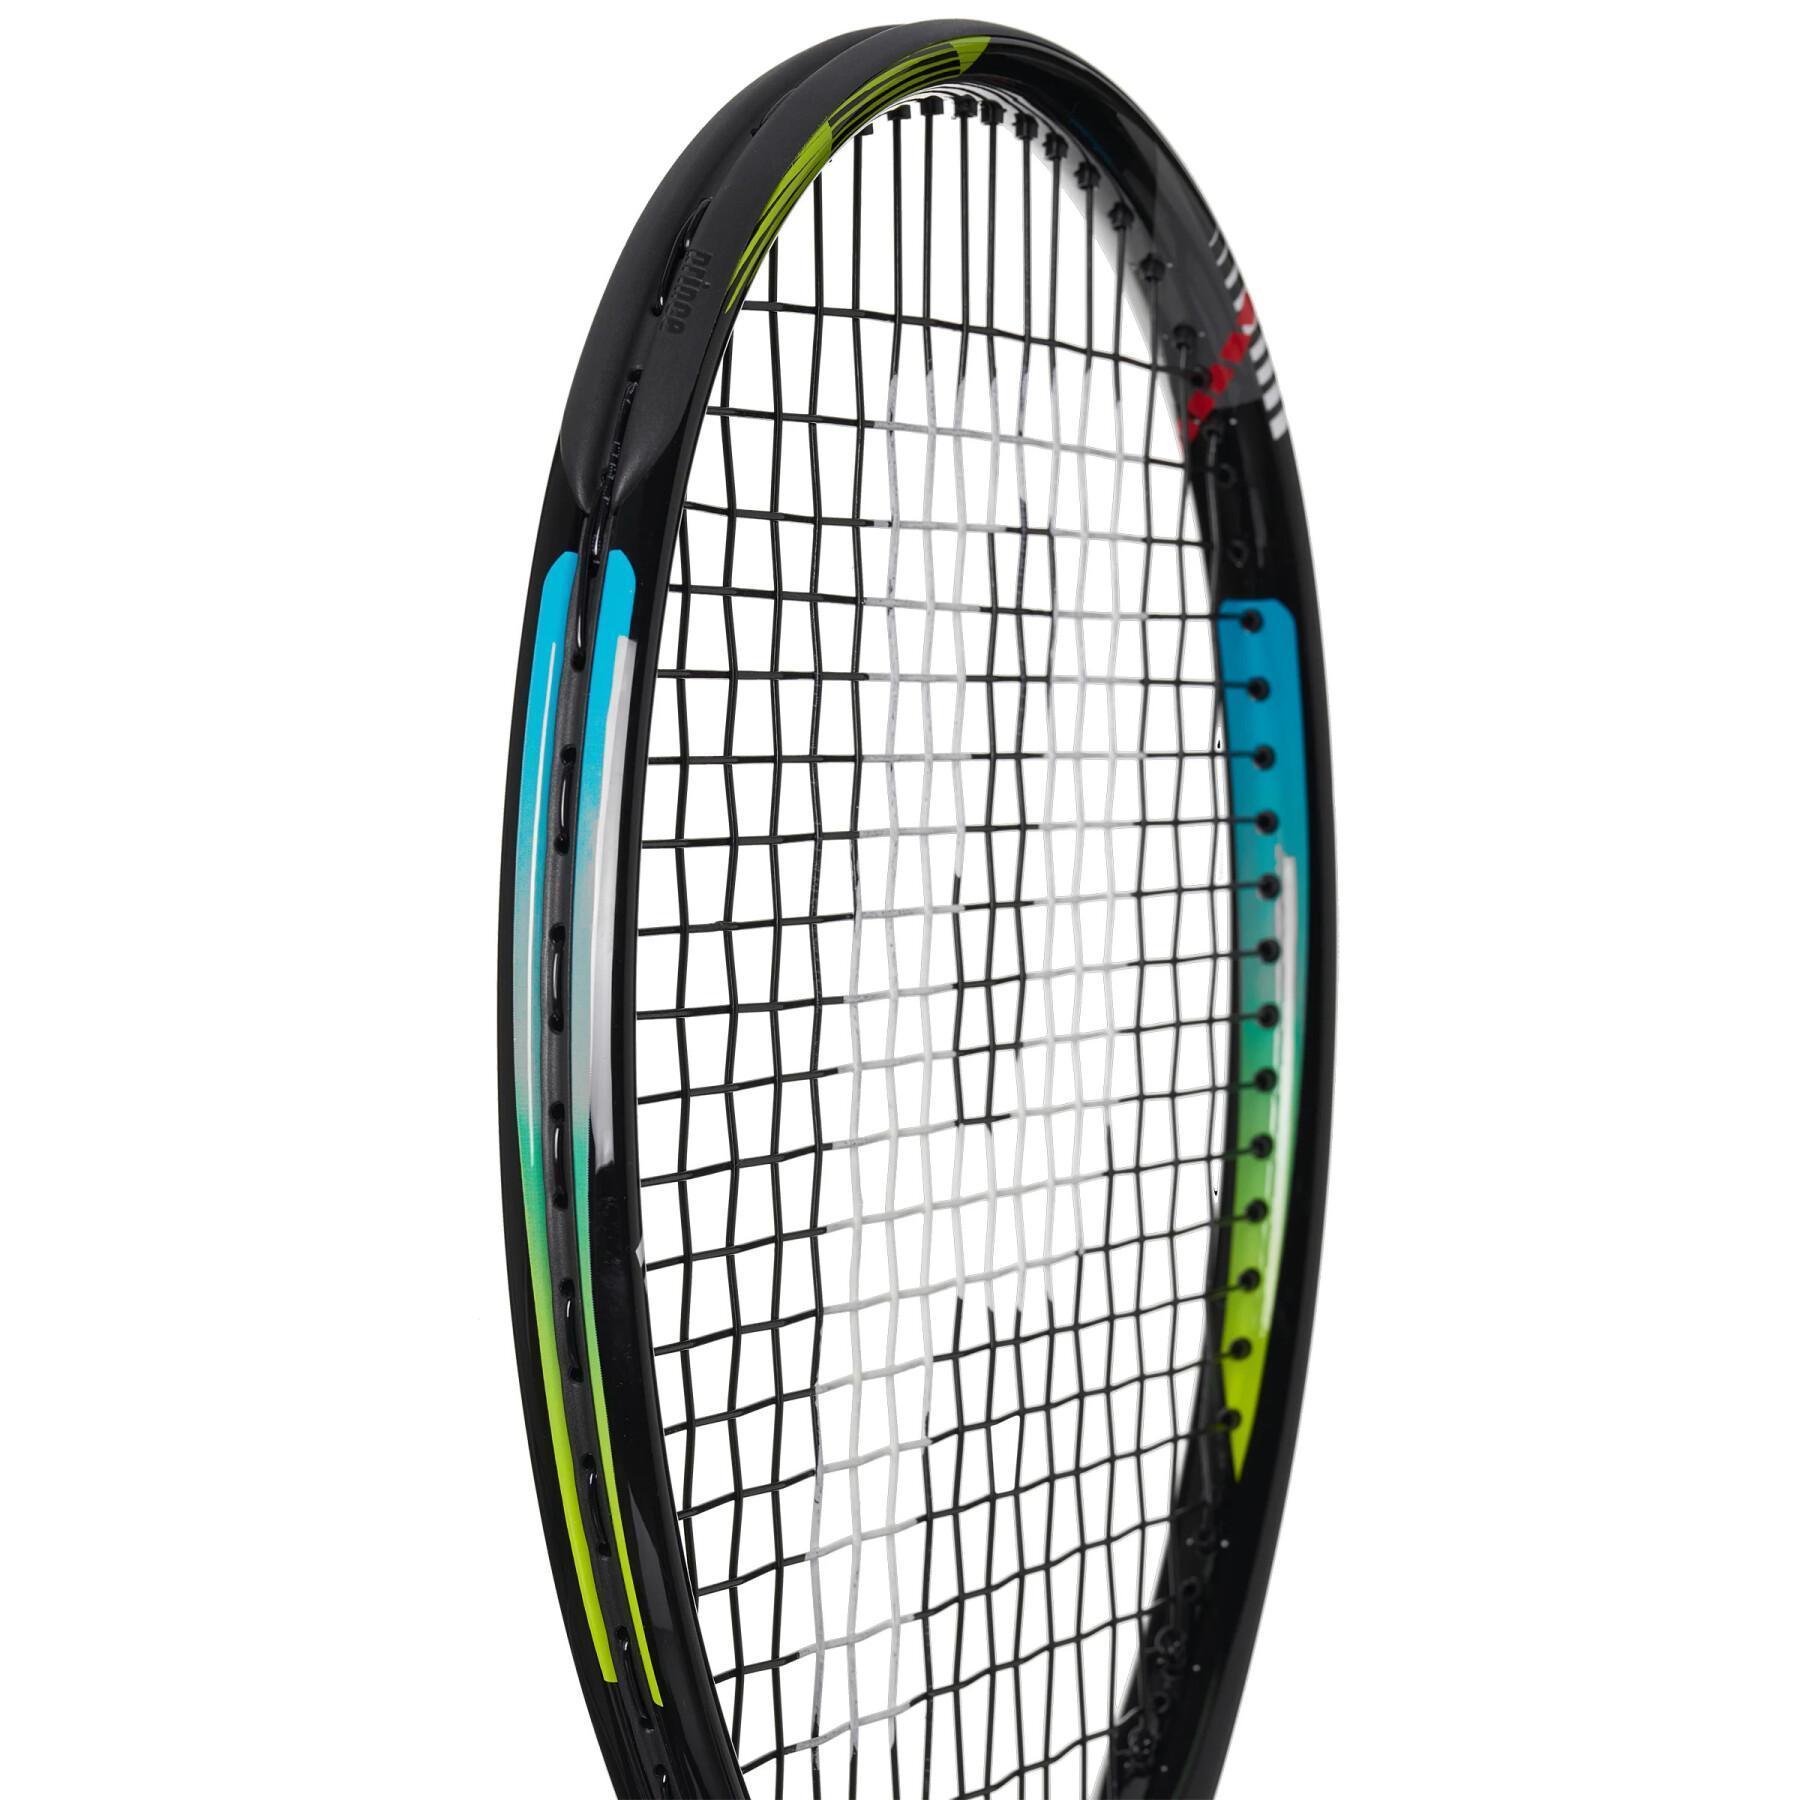 Tennis racket Prince ripstick 25